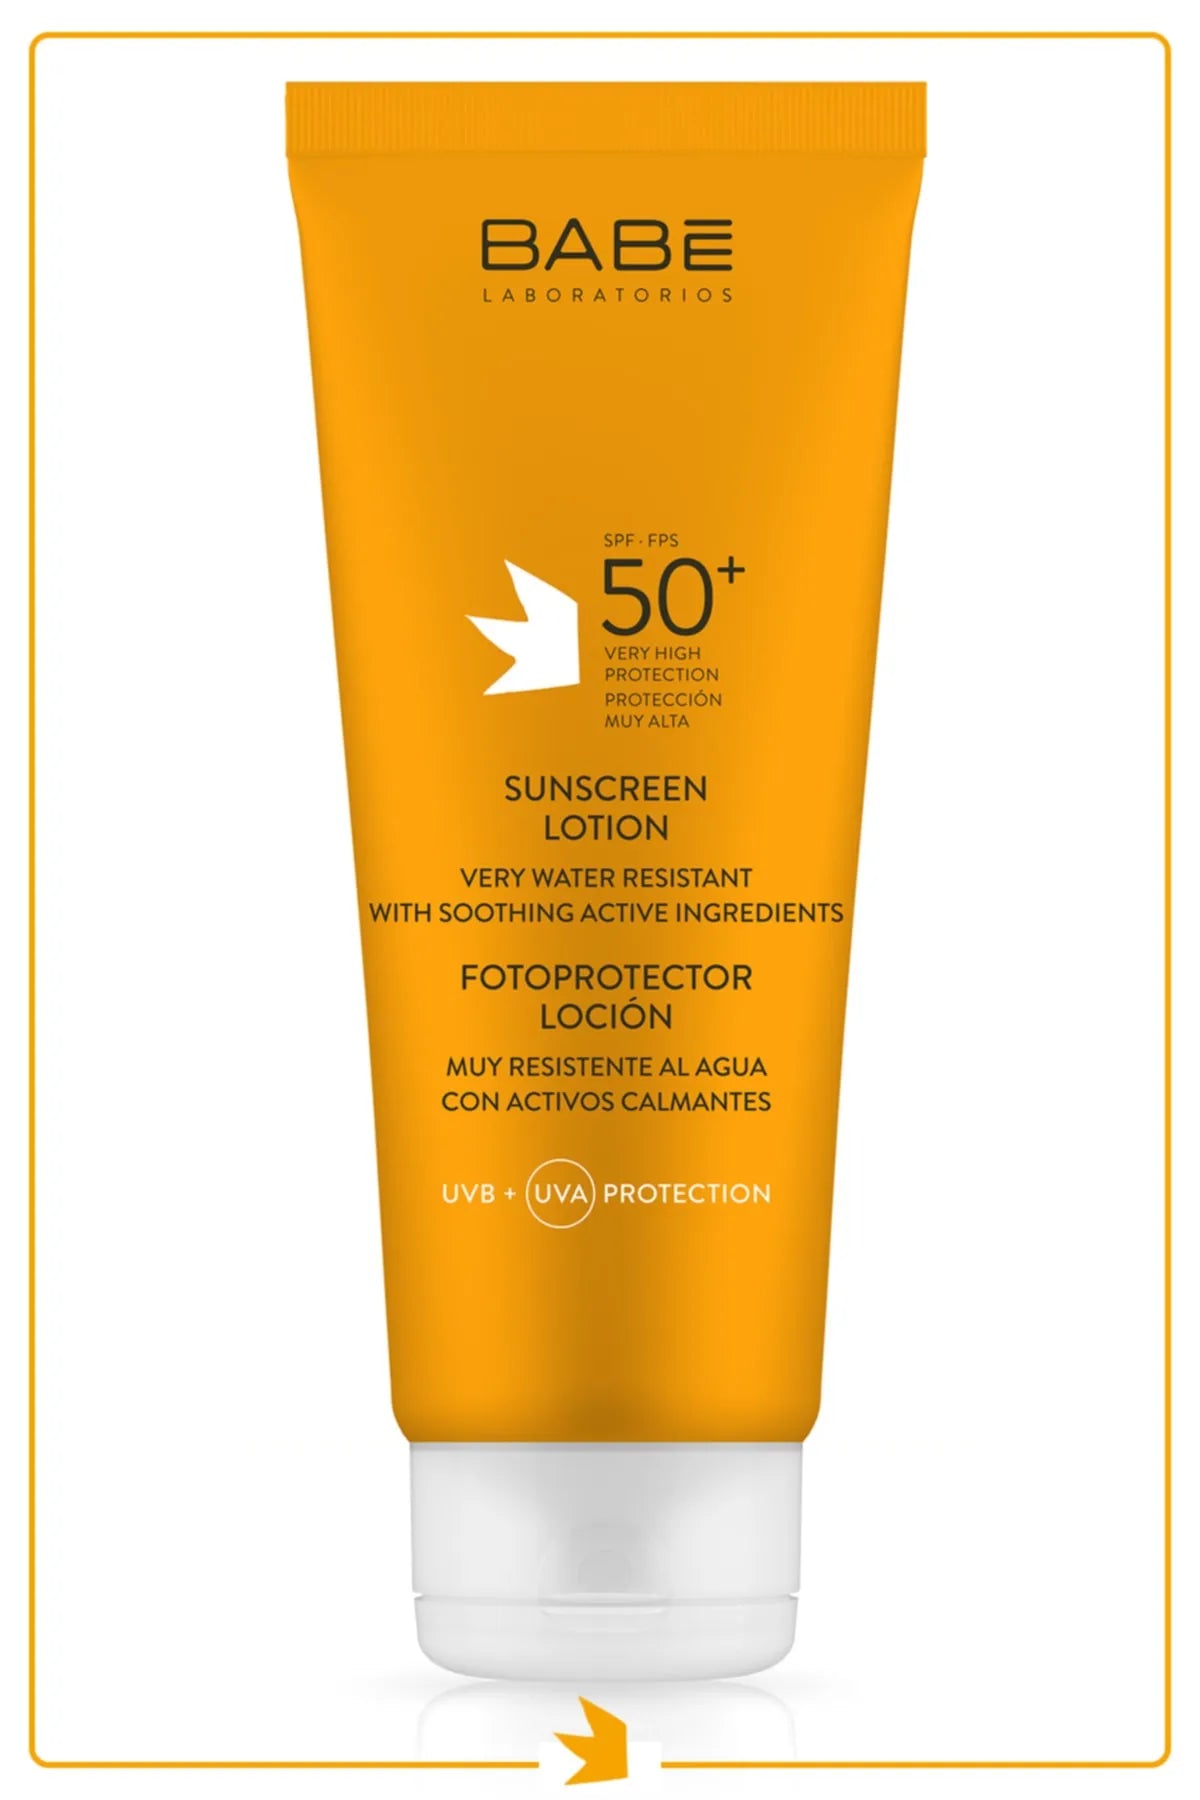 Babe Laboratorios Sunscreen Lotion SPF 50+ - Body Sunscreen 200 ml